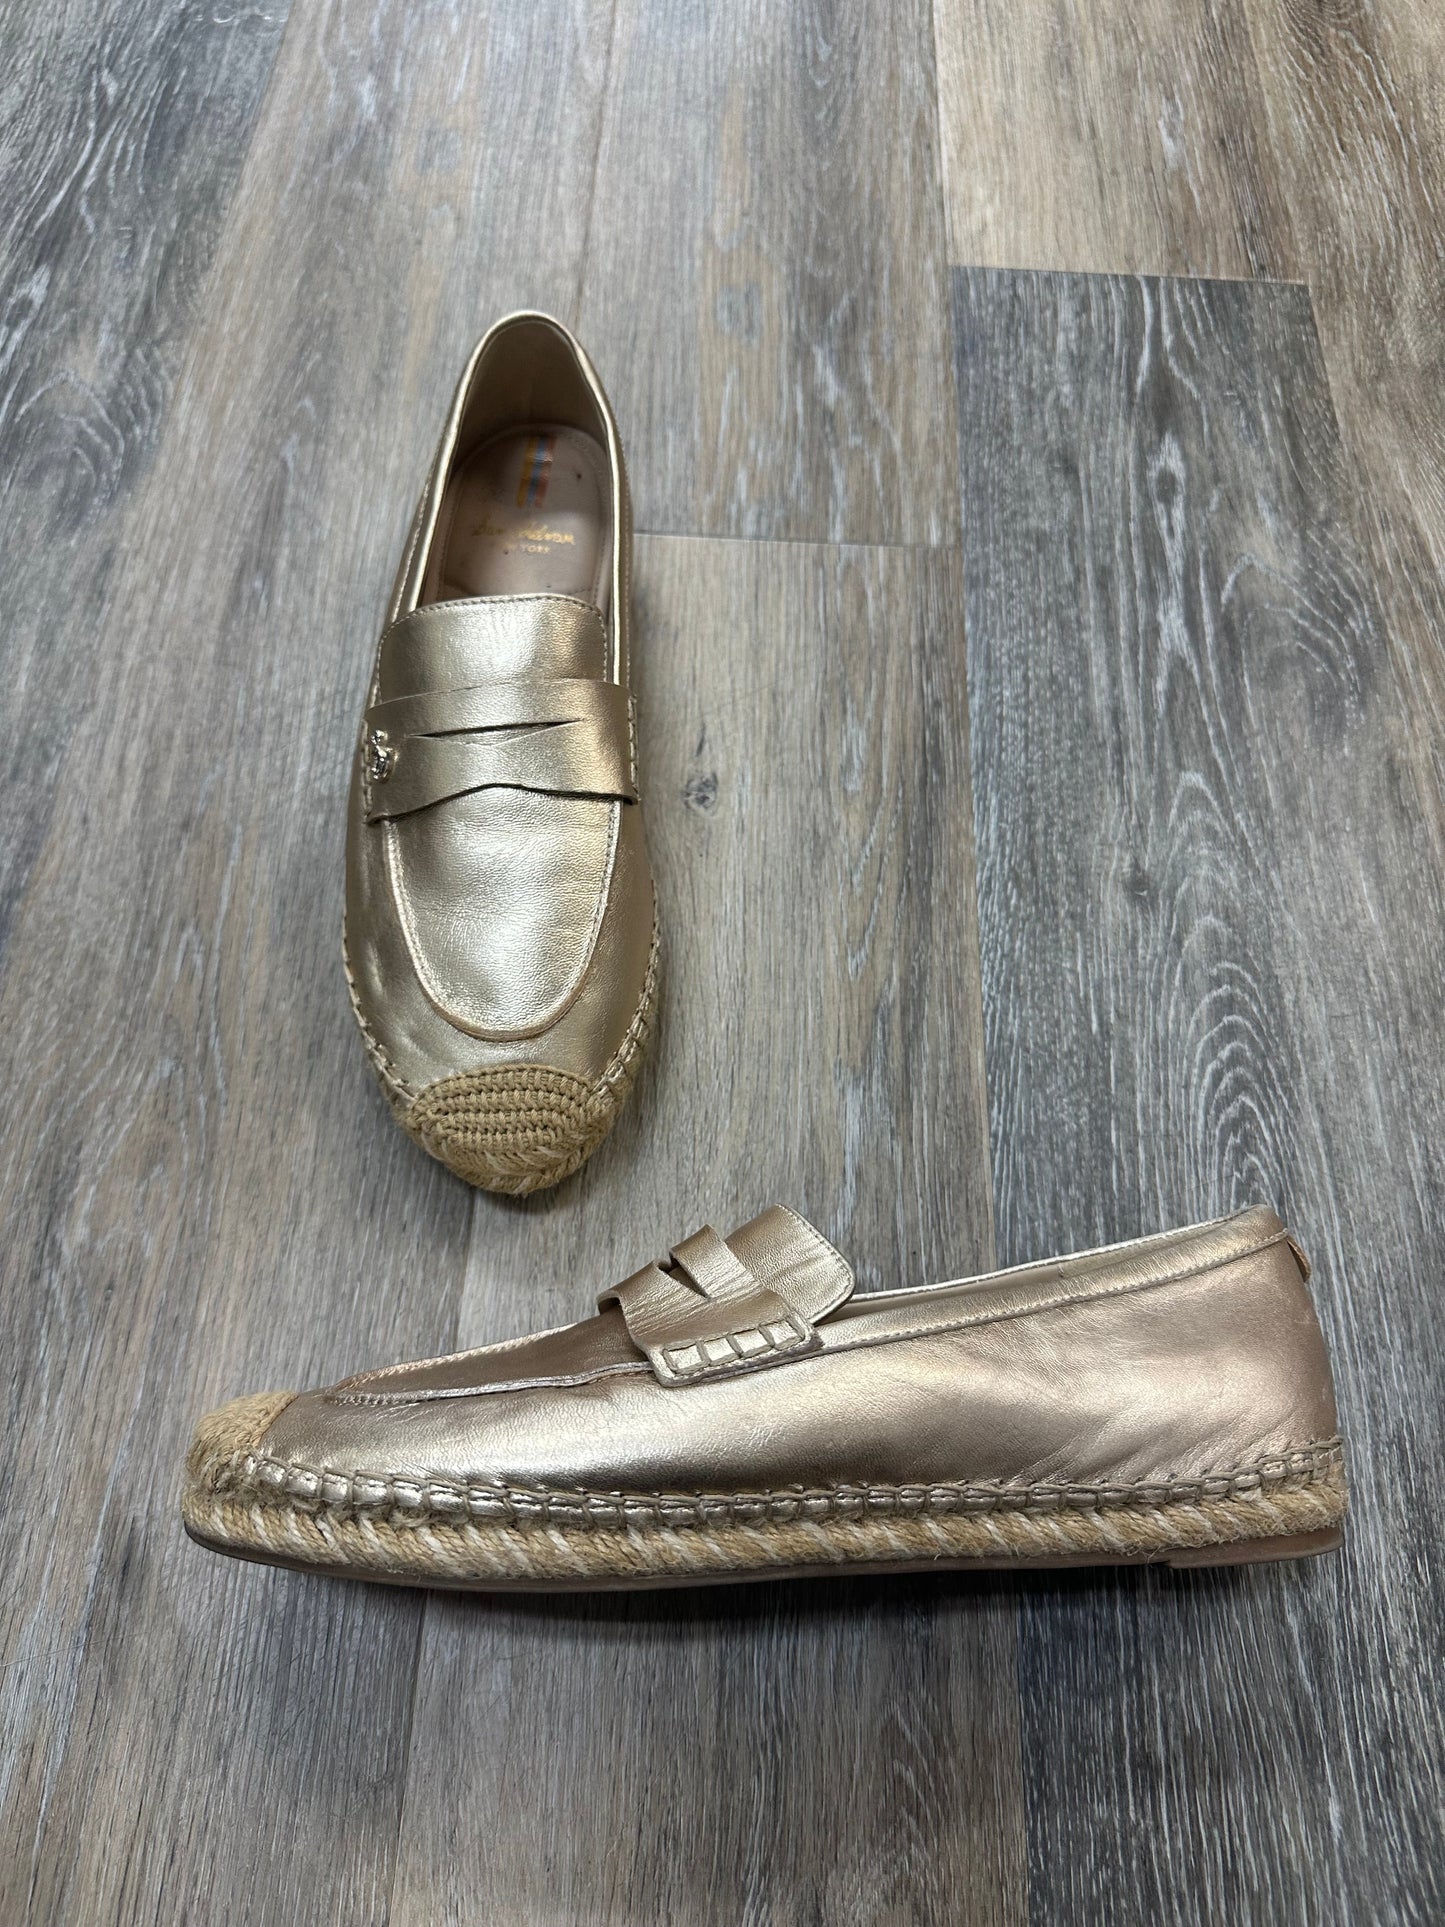 Gold Shoes Flats Sam Edelman, Size 8.5